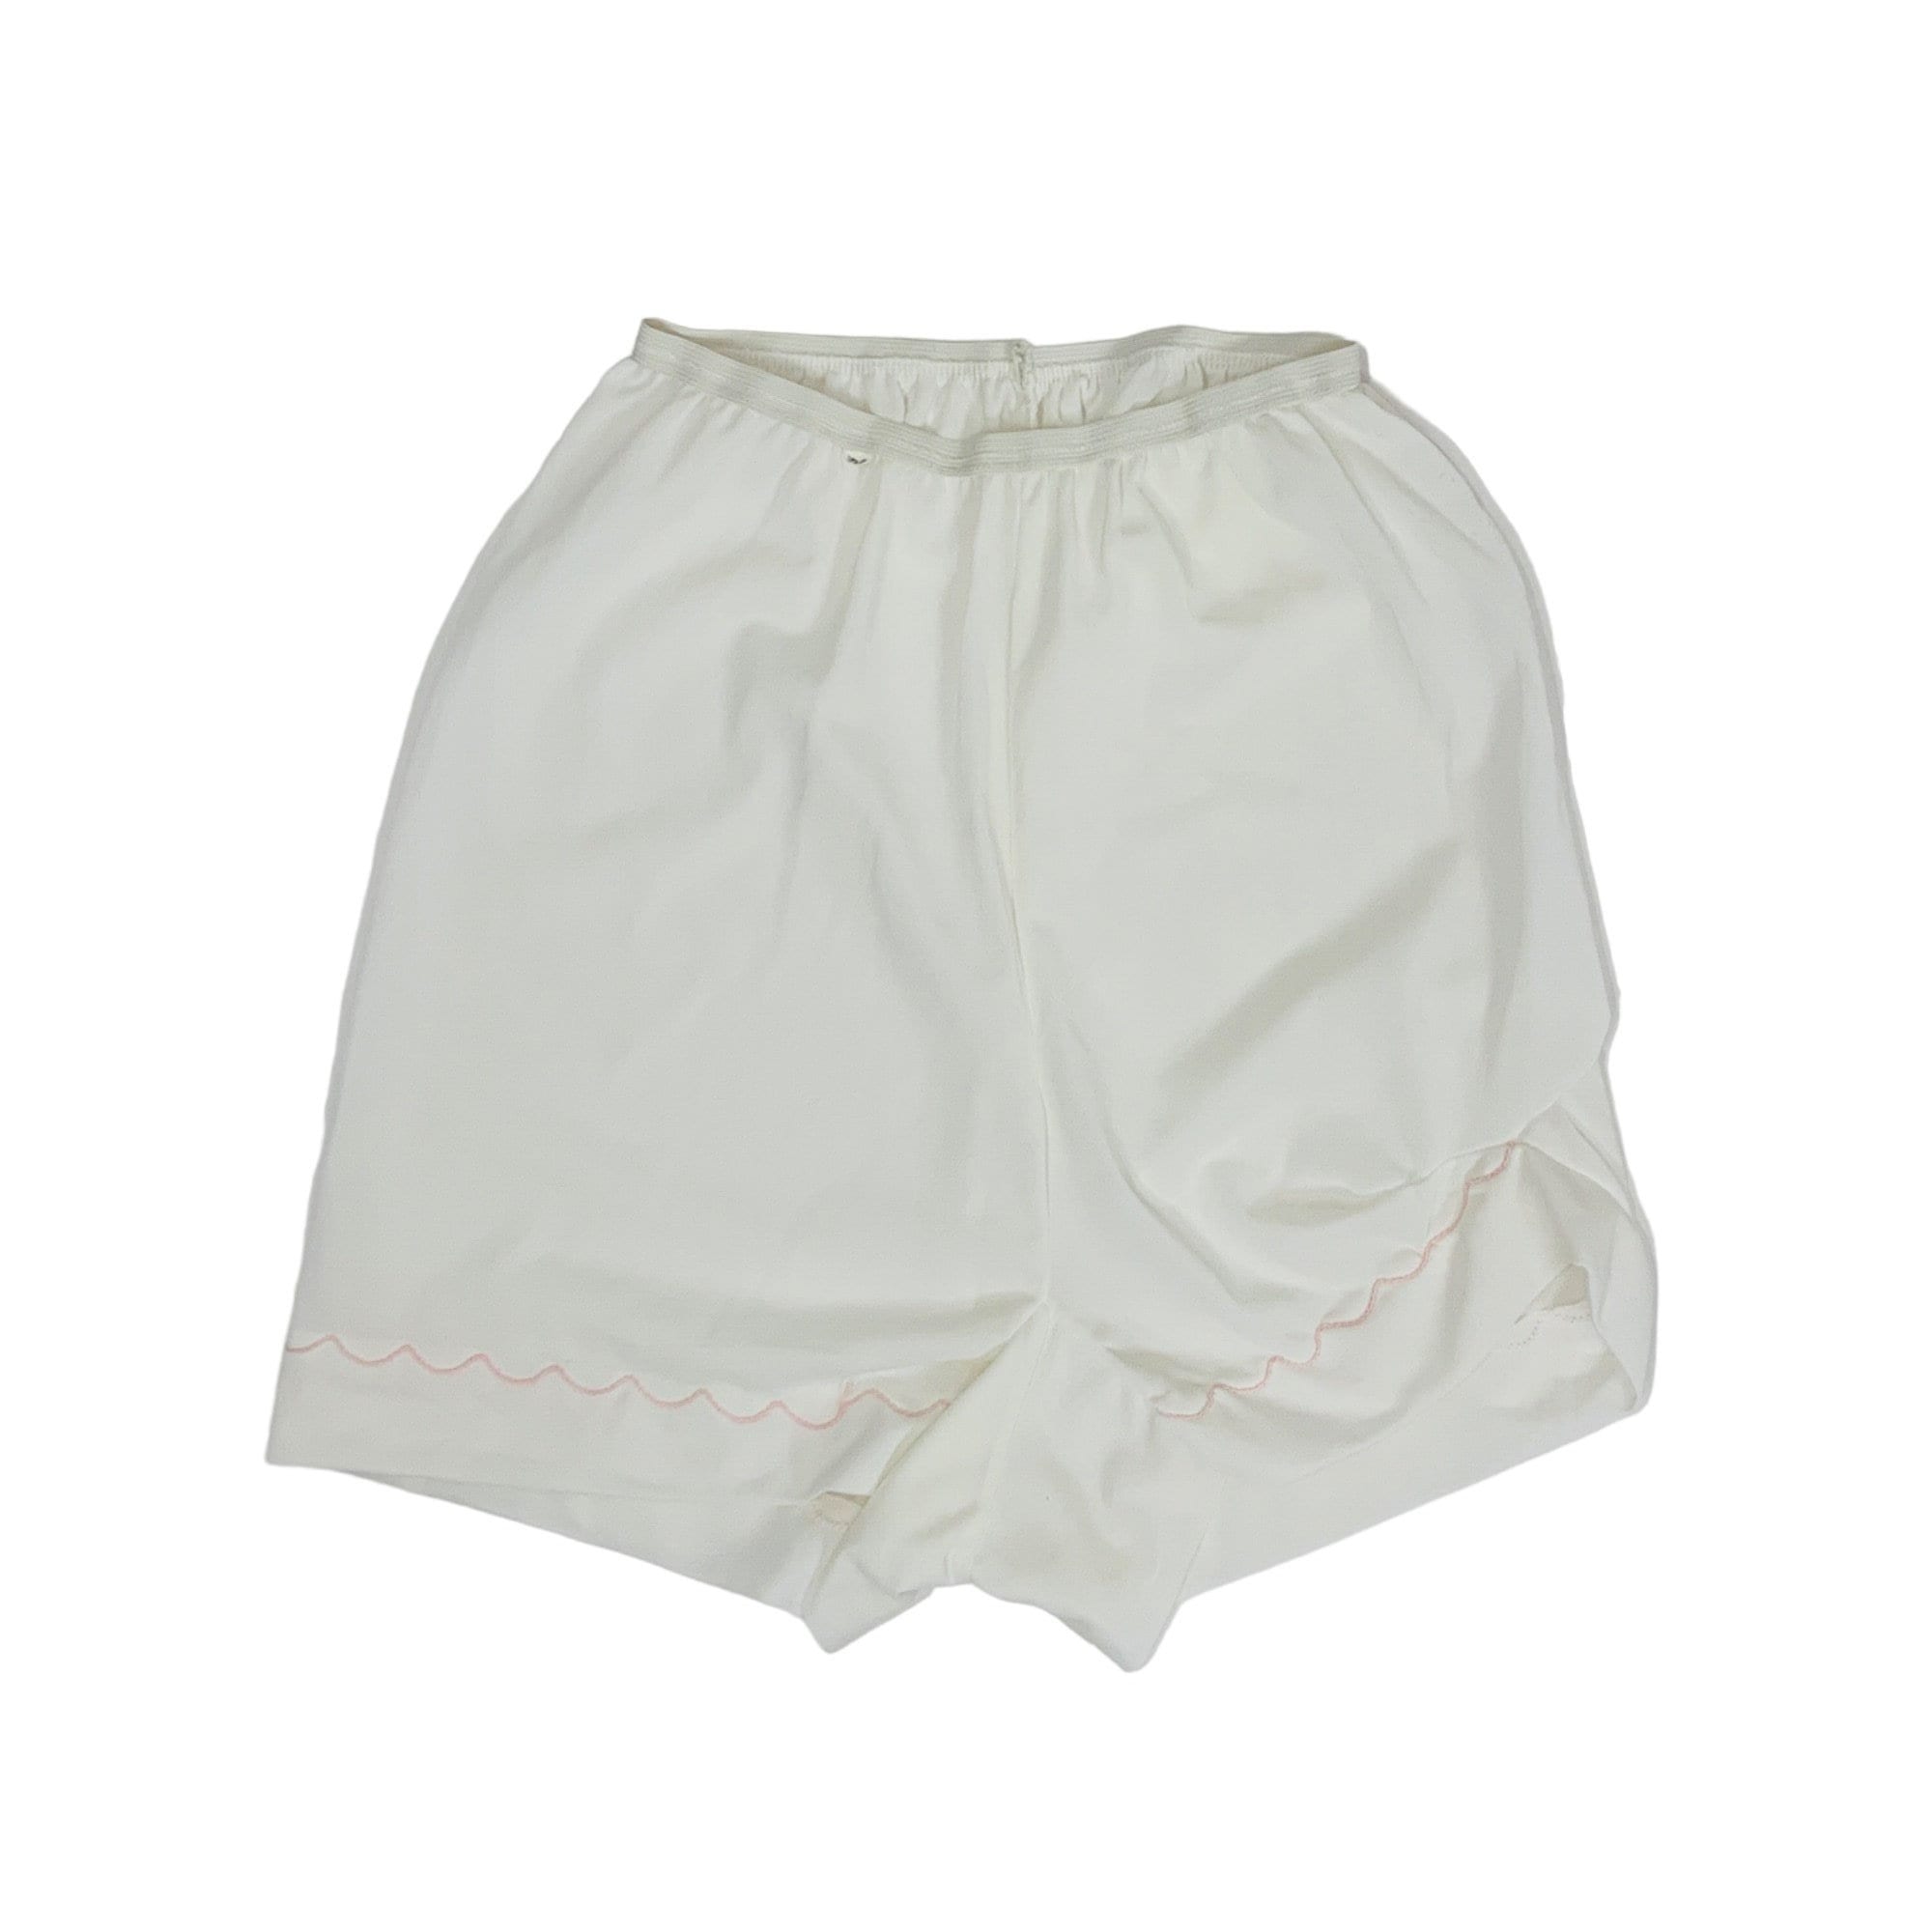 Vintage Lingerie Vanity Fair White Nylon Pettipants Tap Shorts